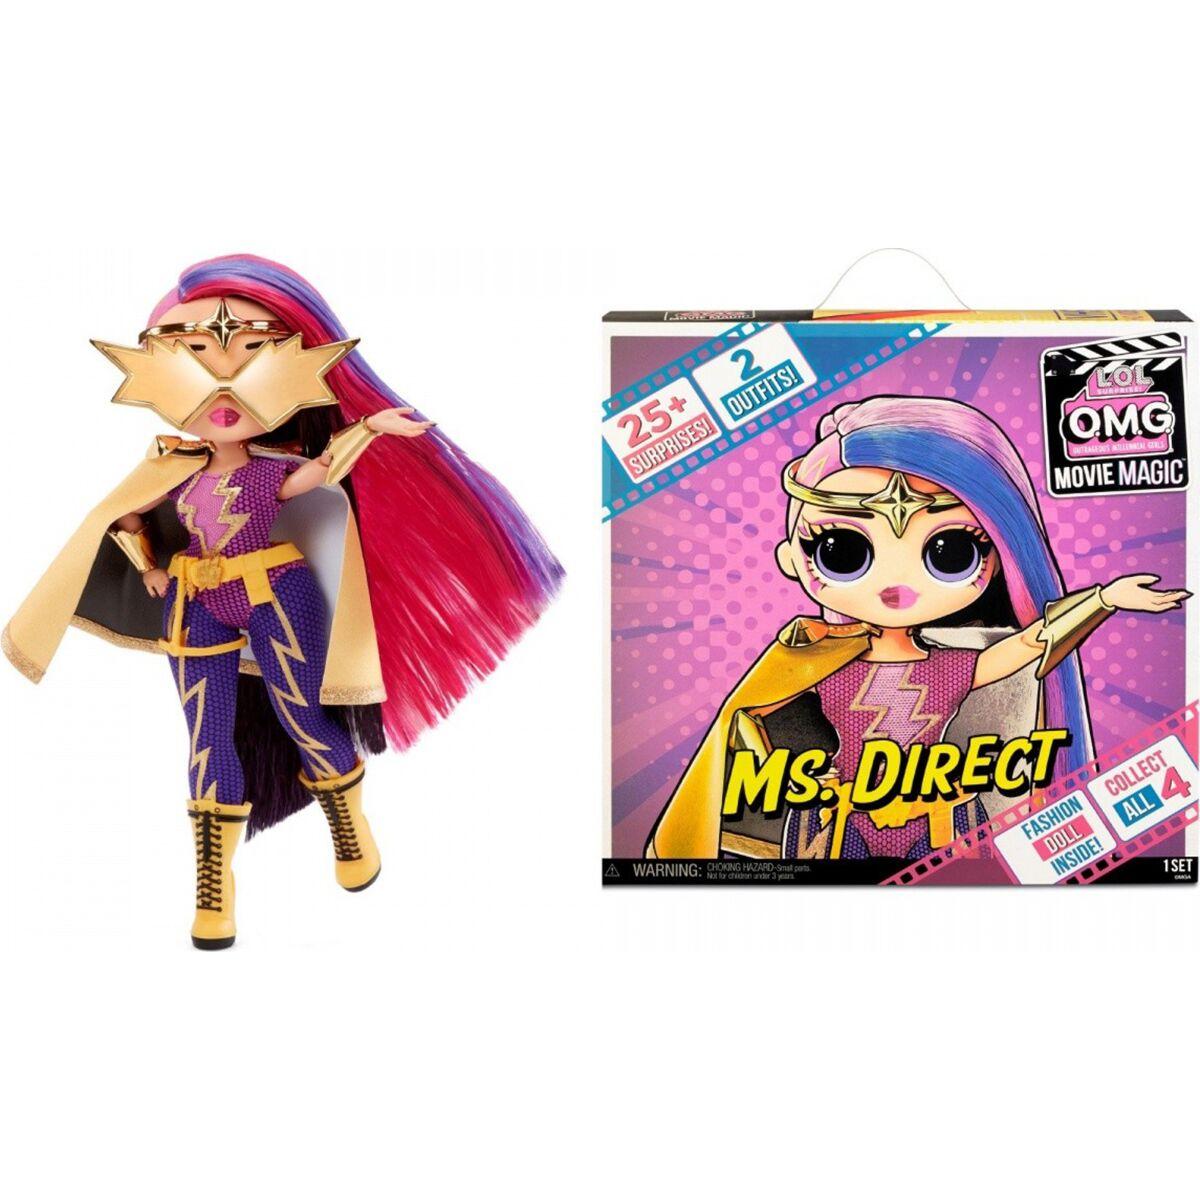 L.O.L.: Surprise Кукла OMG Movie Magic Doll- Ms. Direct, фото 1